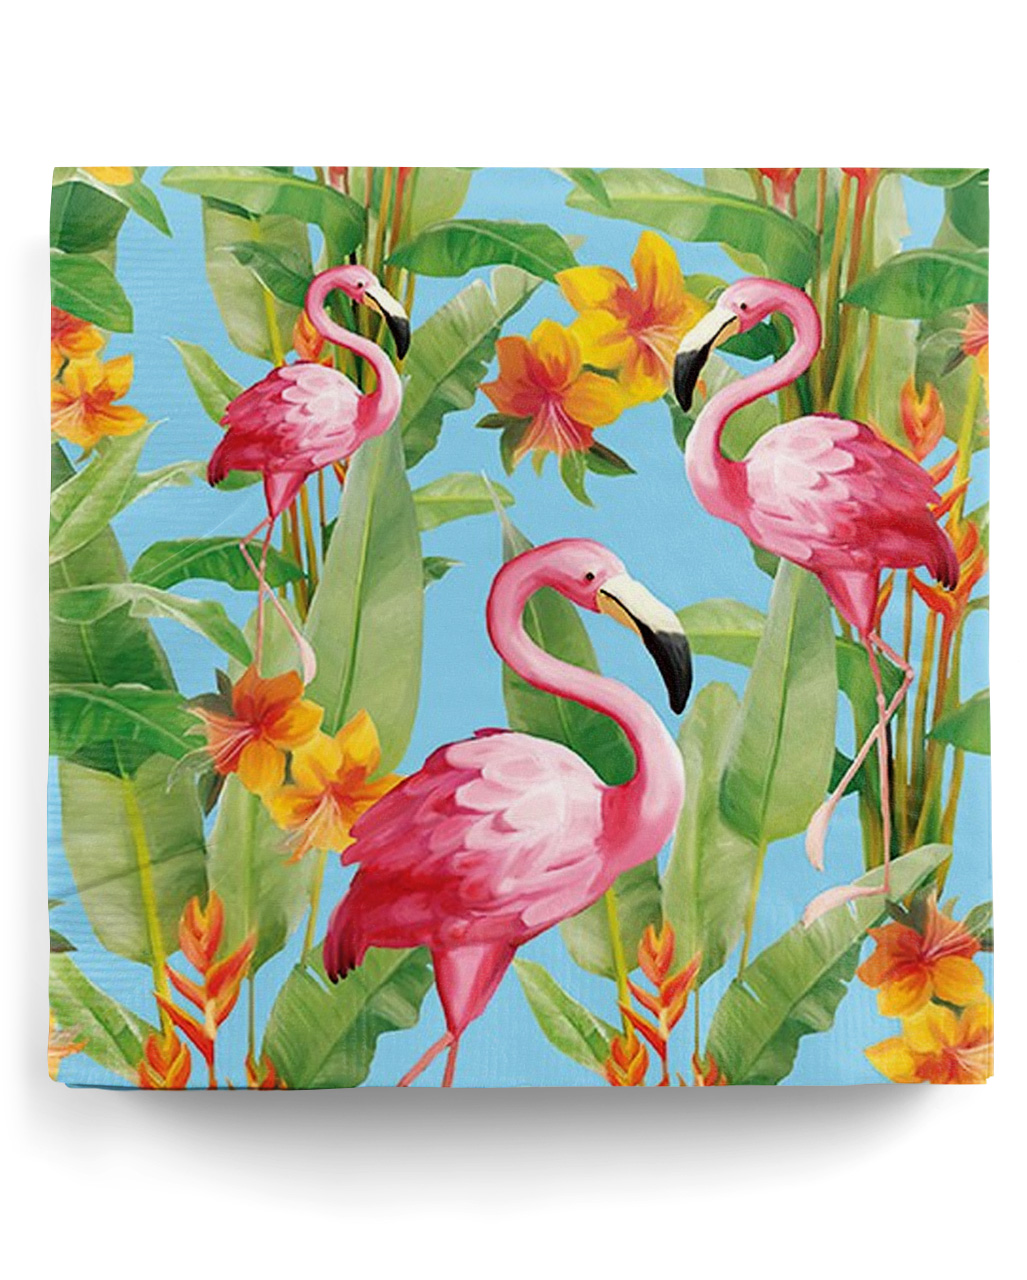 4 Stück Aufblasbarer Flamingo 60 cm Deko zu Karneval Fasching Party Geburtstag 